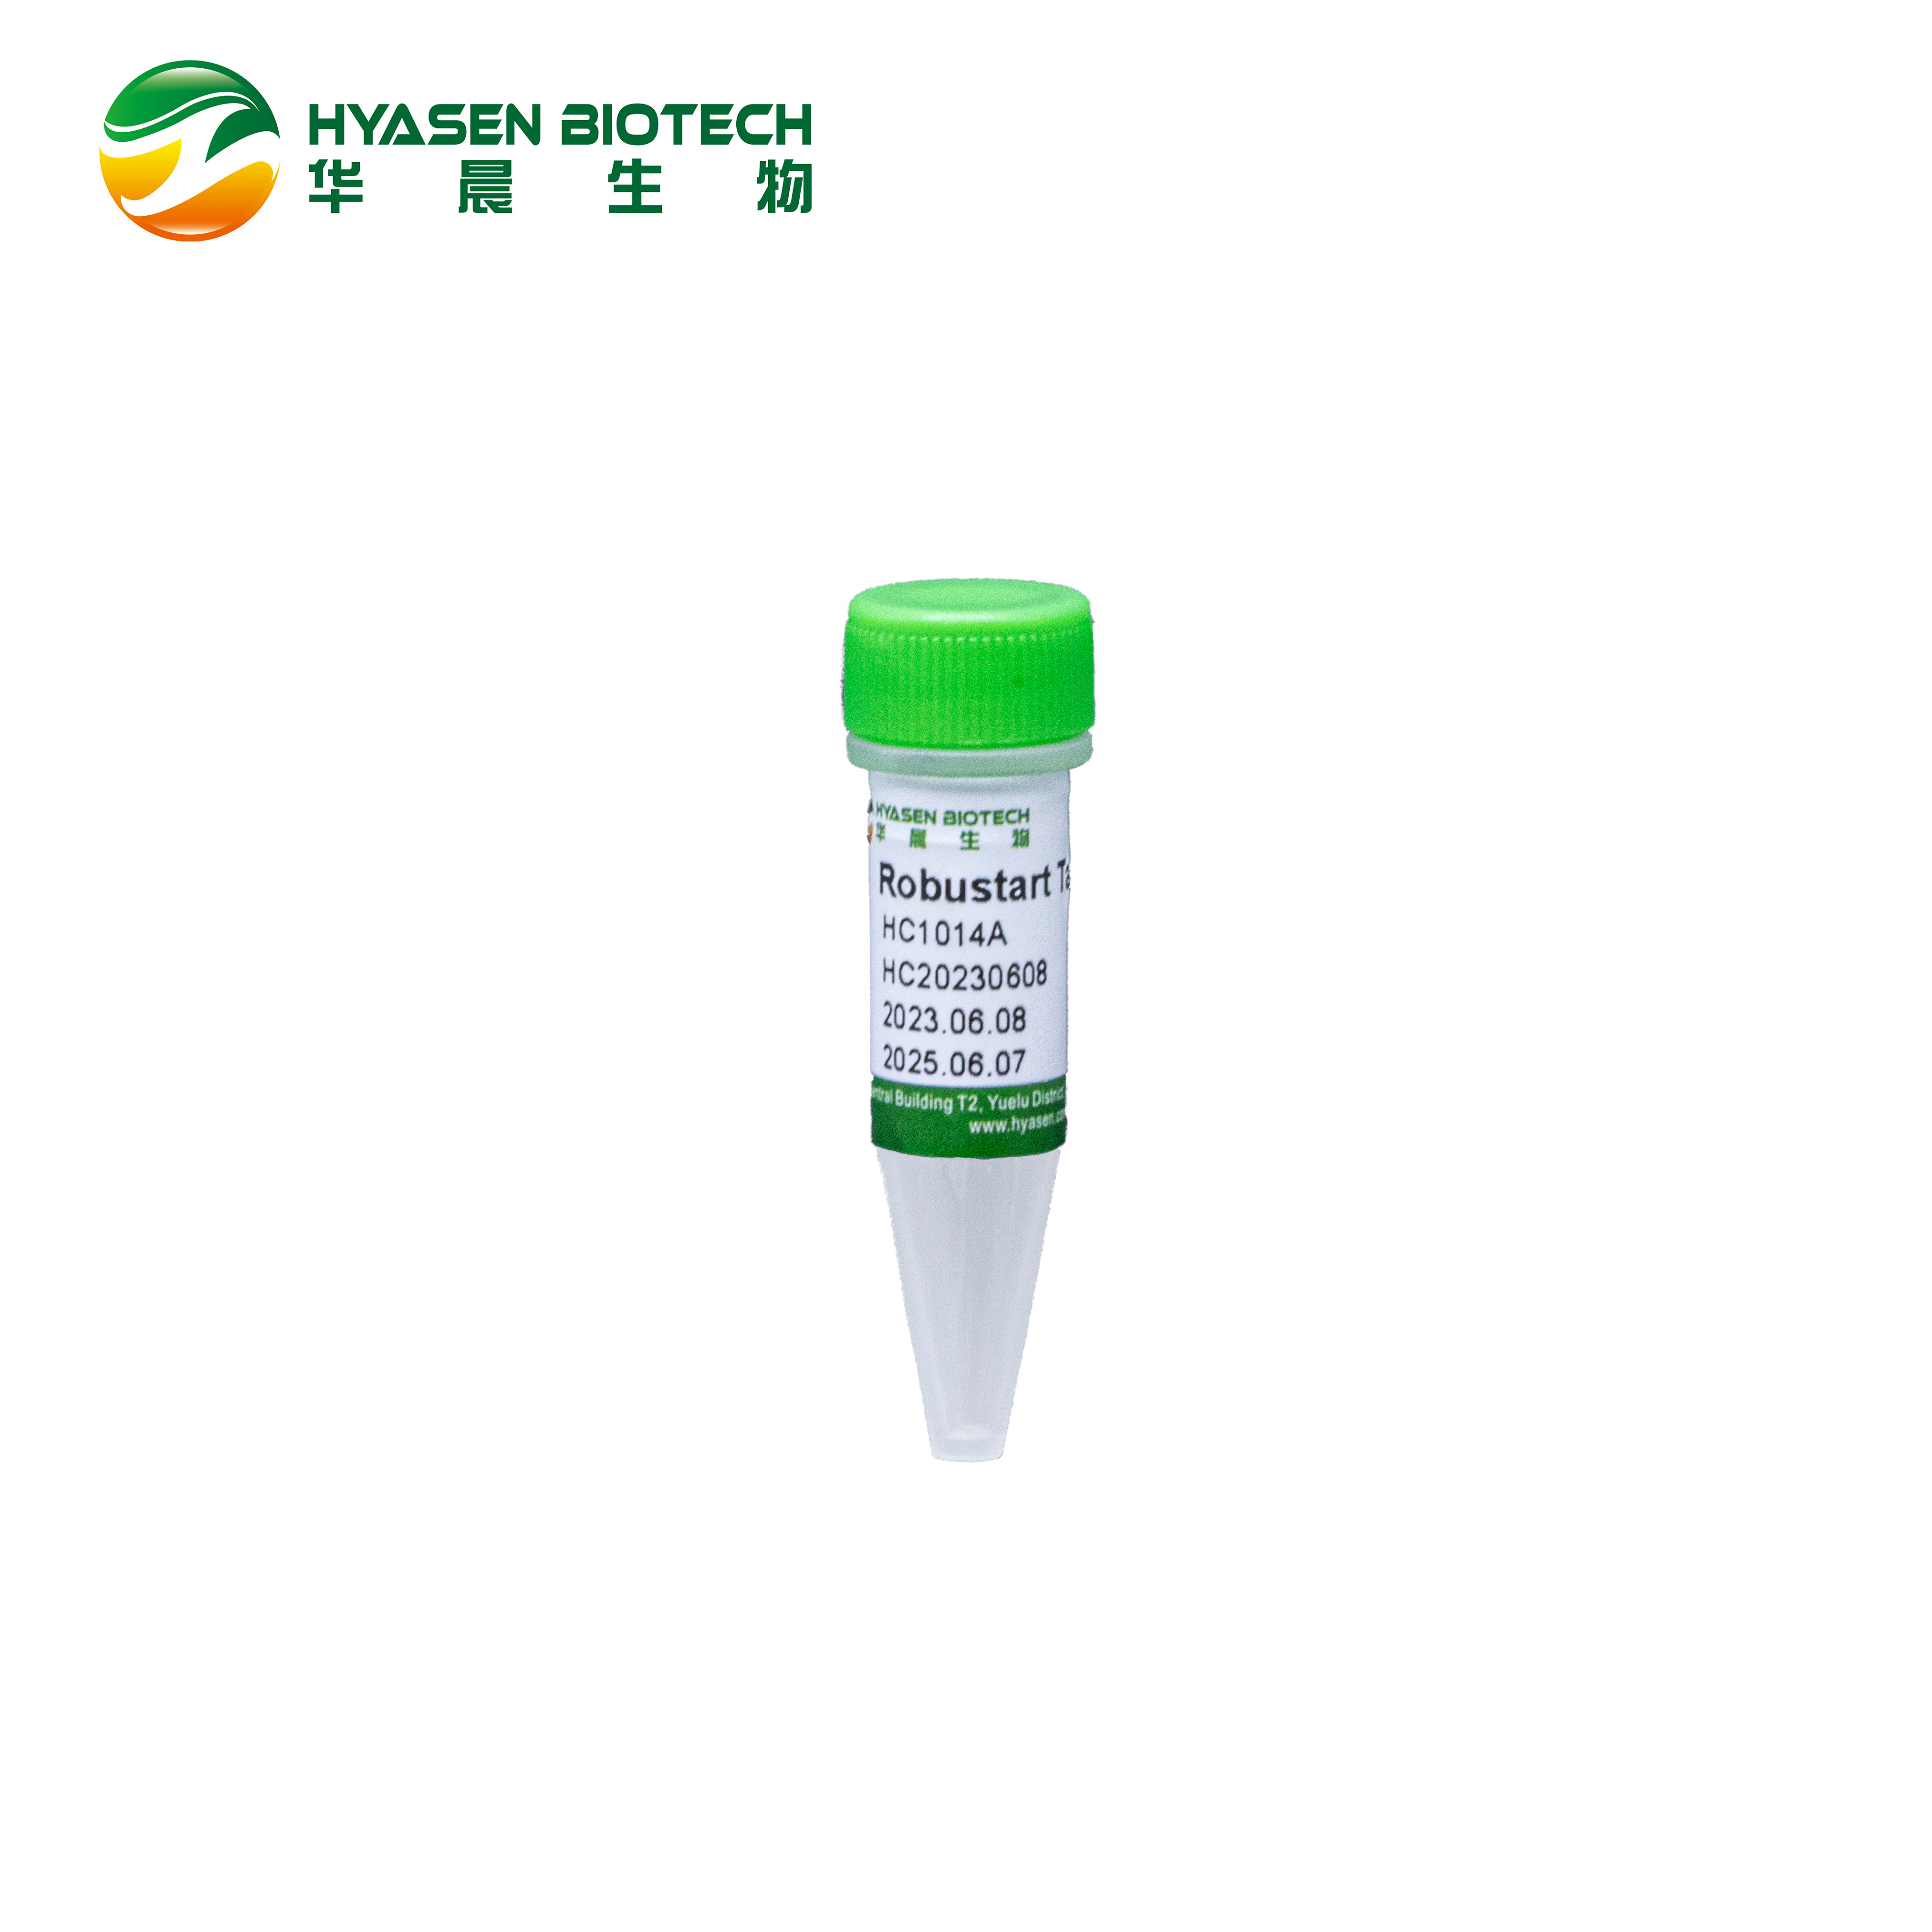 Robustart Taq DNA Polymerase HC1014A Featured Image